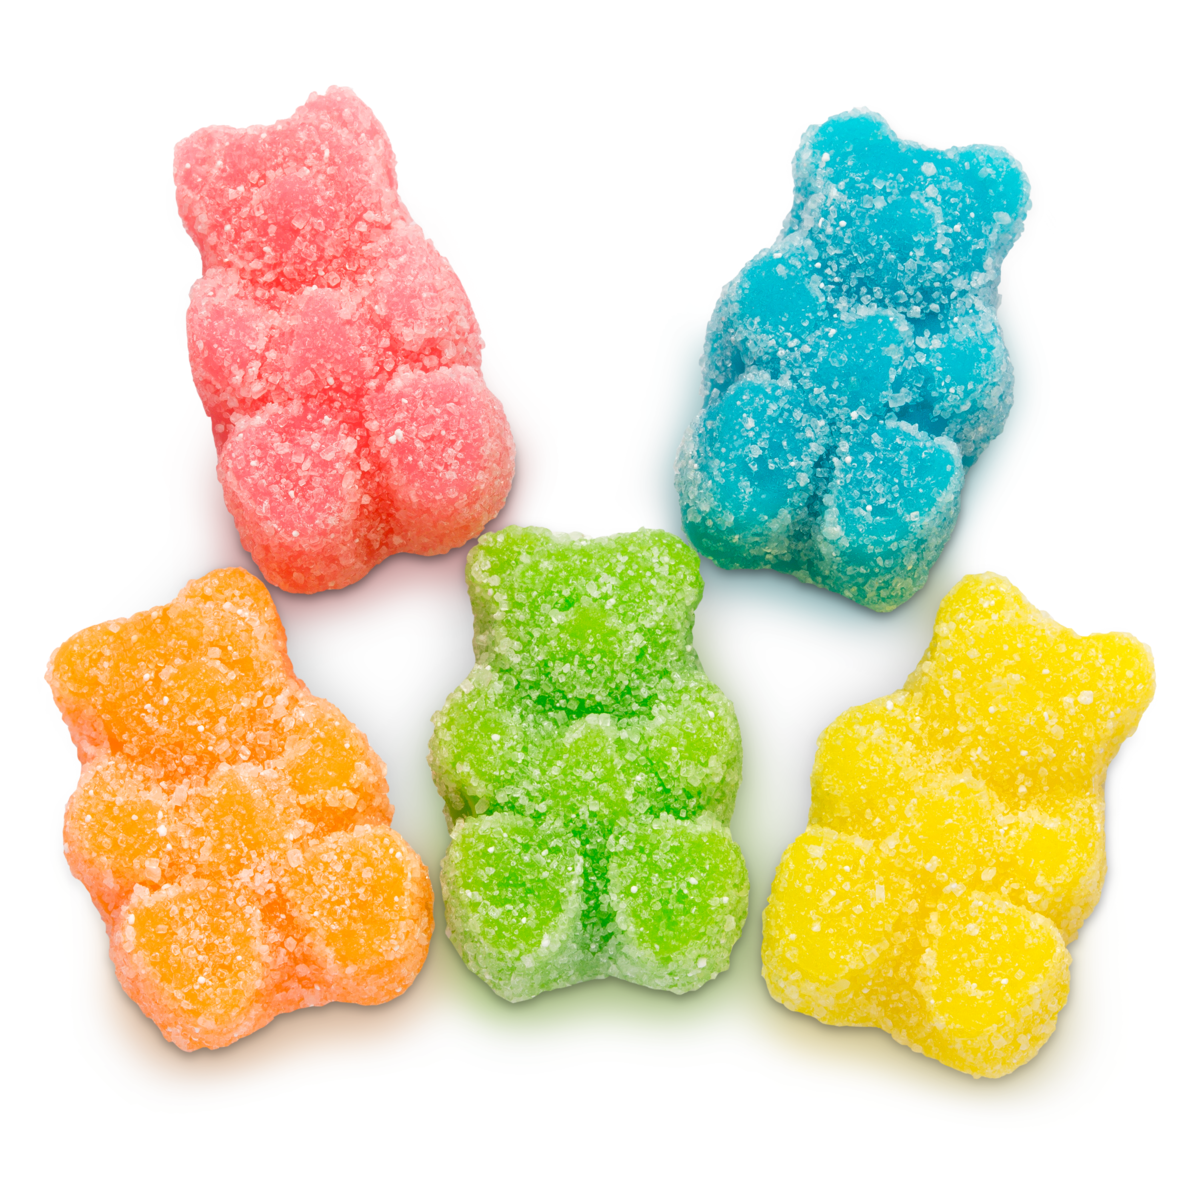 Sugar Sanded Gummi Bears- 4 oz bag